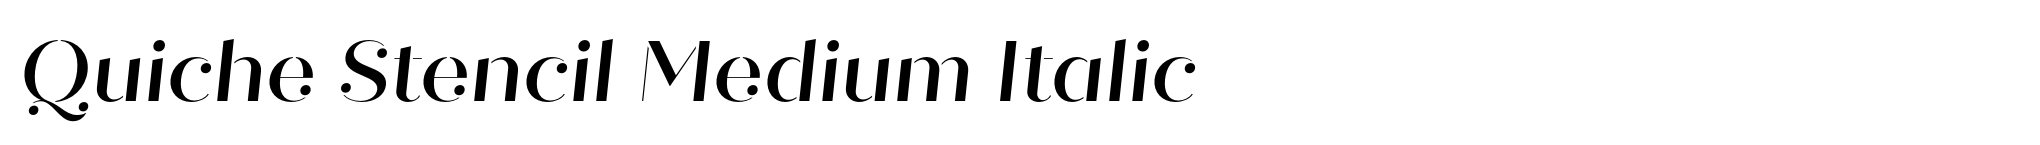 Quiche Stencil Medium Italic image